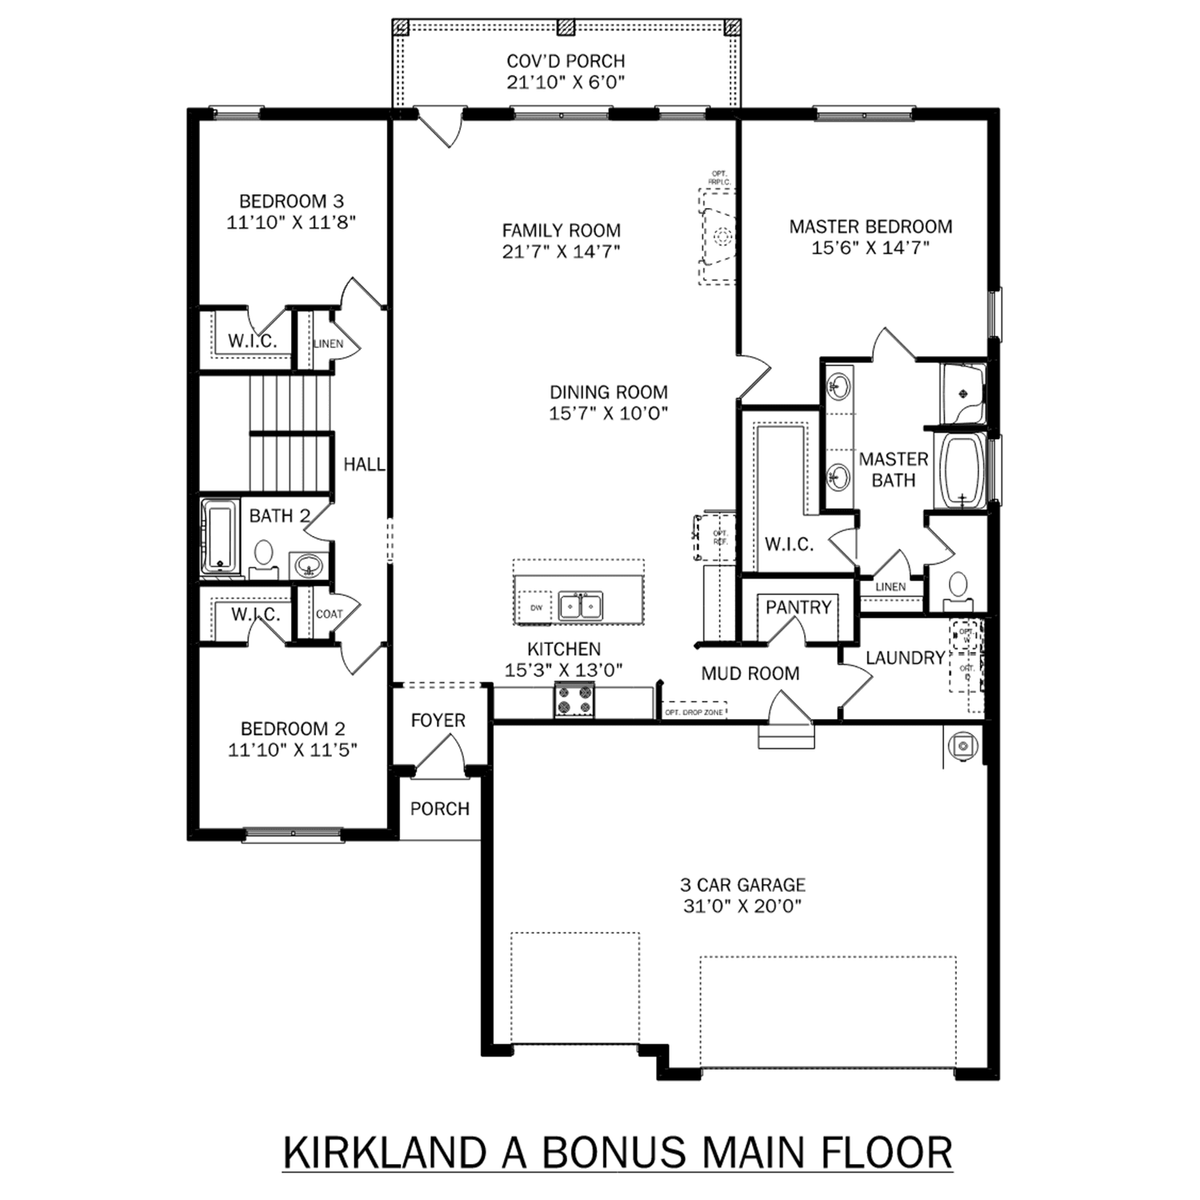 1 - The Kirkland with Bonus buildable floor plan layout in Davidson Homes' Cain Park community.